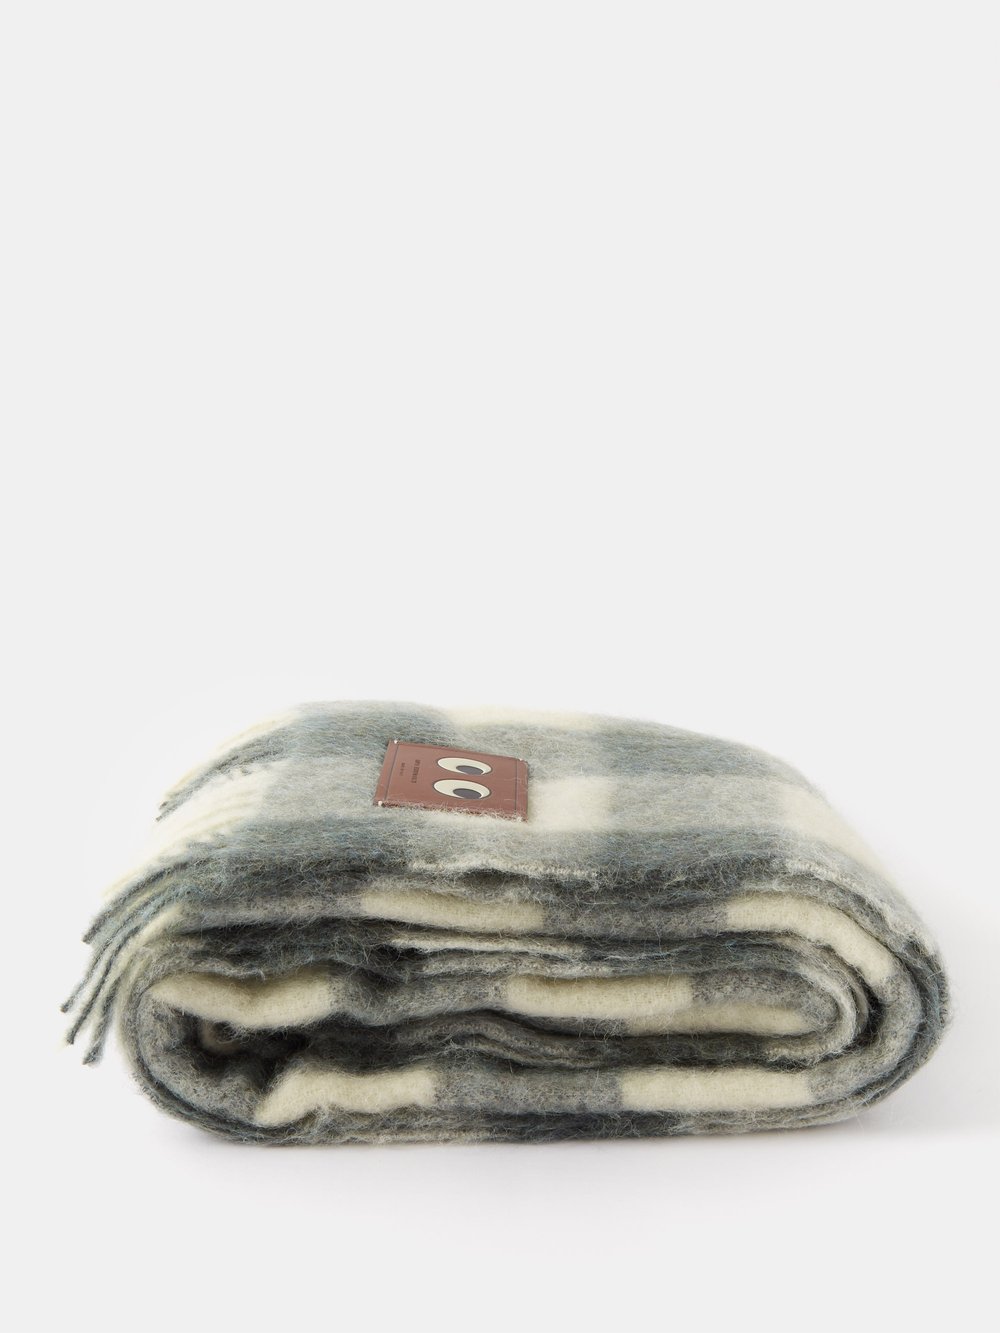 Одеяло из ткани альпаки eyes в мелкую клетку Anya Hindmarch, серый seton anya dragonwyck